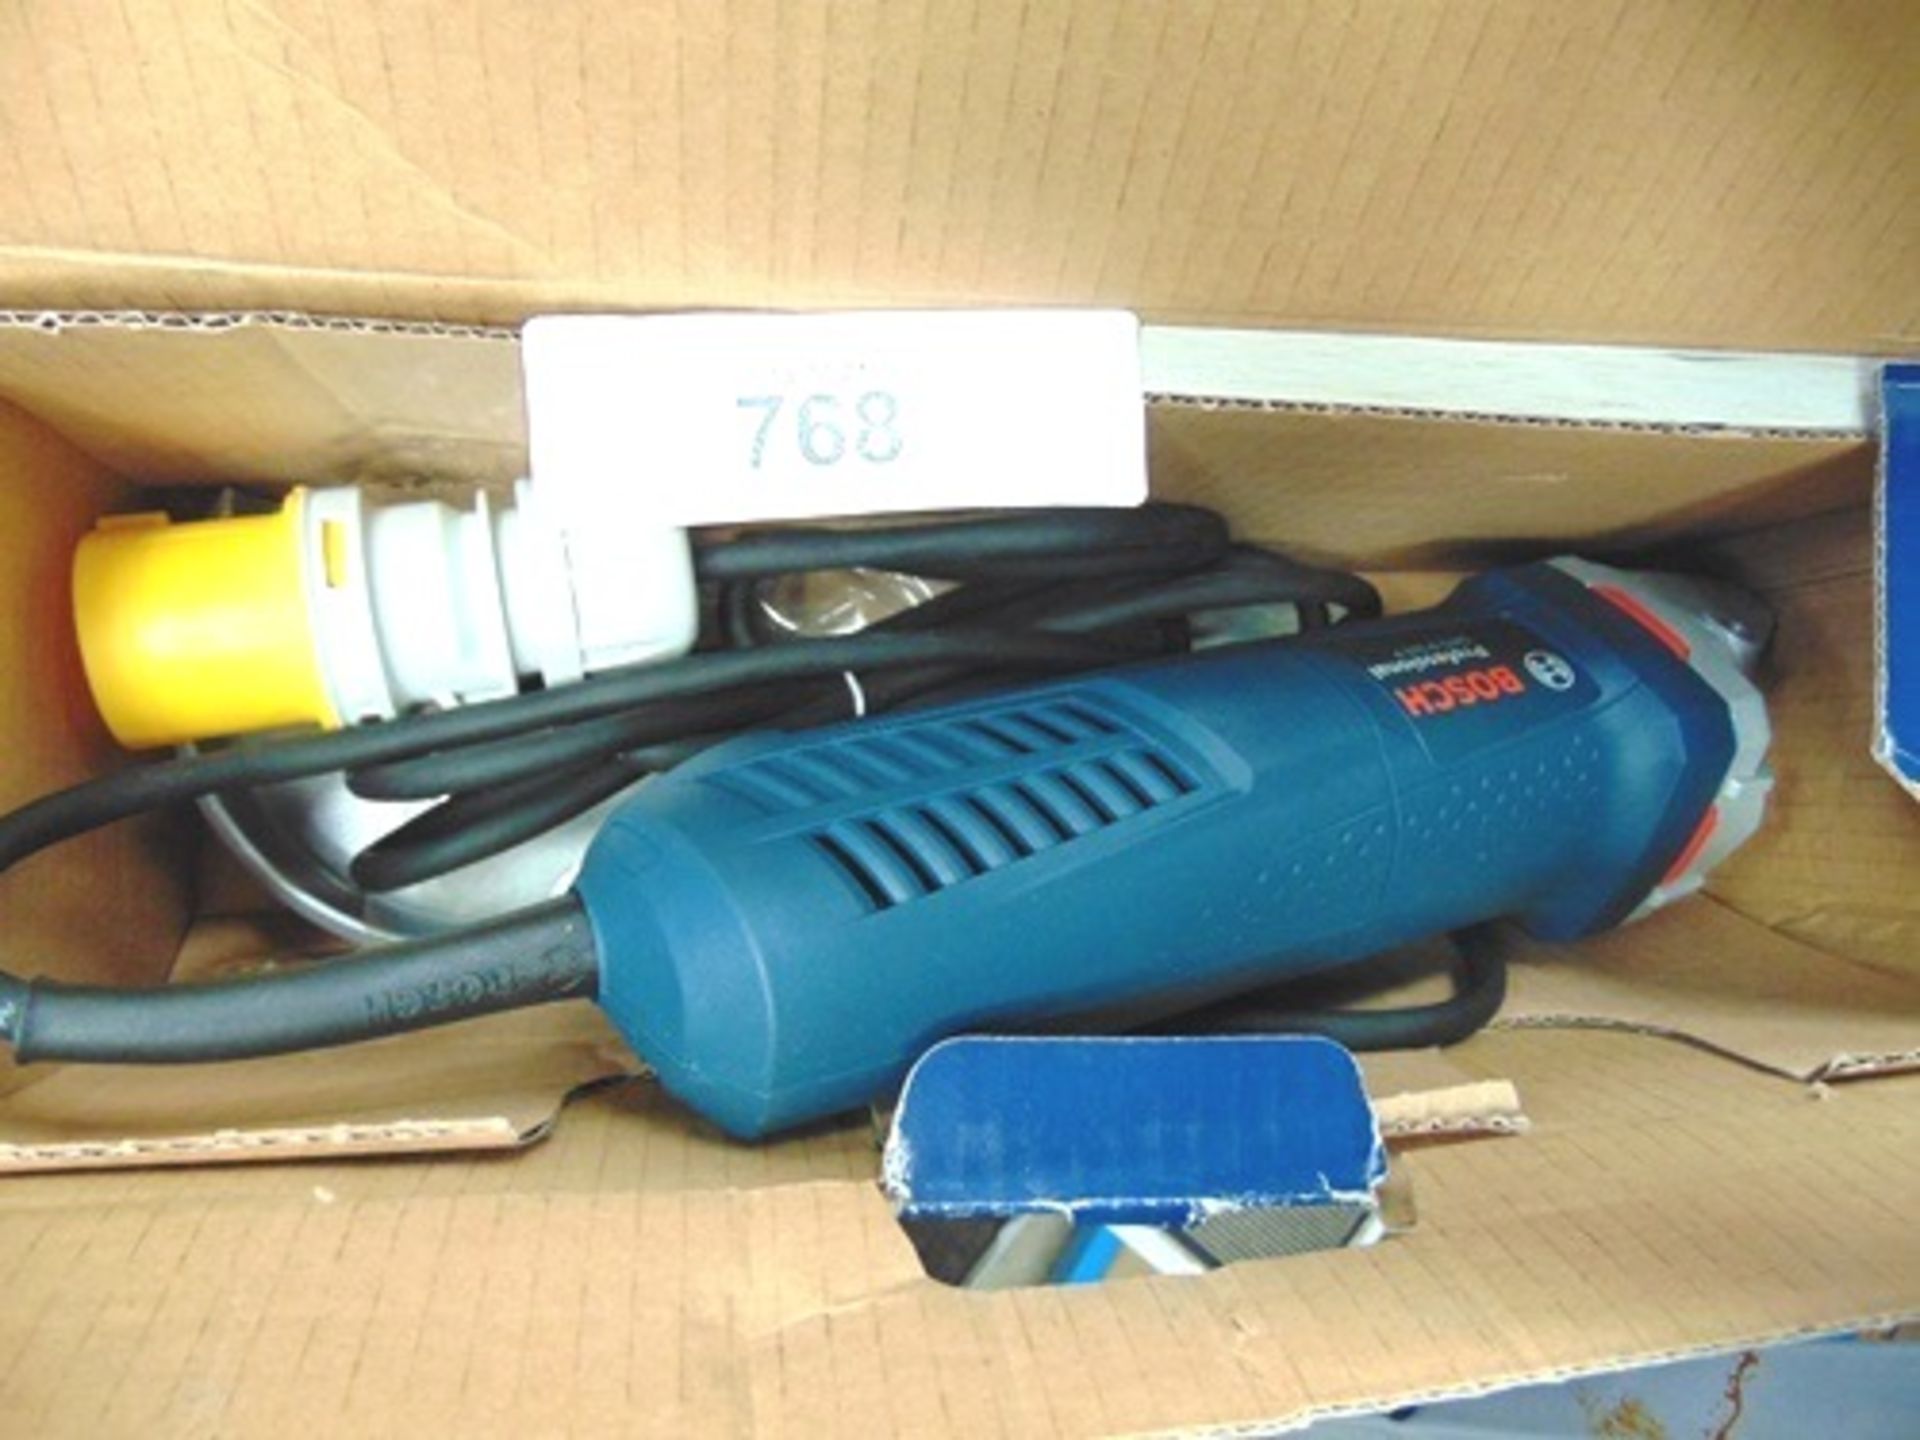 1 x Bosch angle grinder, Model G90-260, 900W, 110V - powers on ok (Grade B) (ES16) - Image 2 of 2